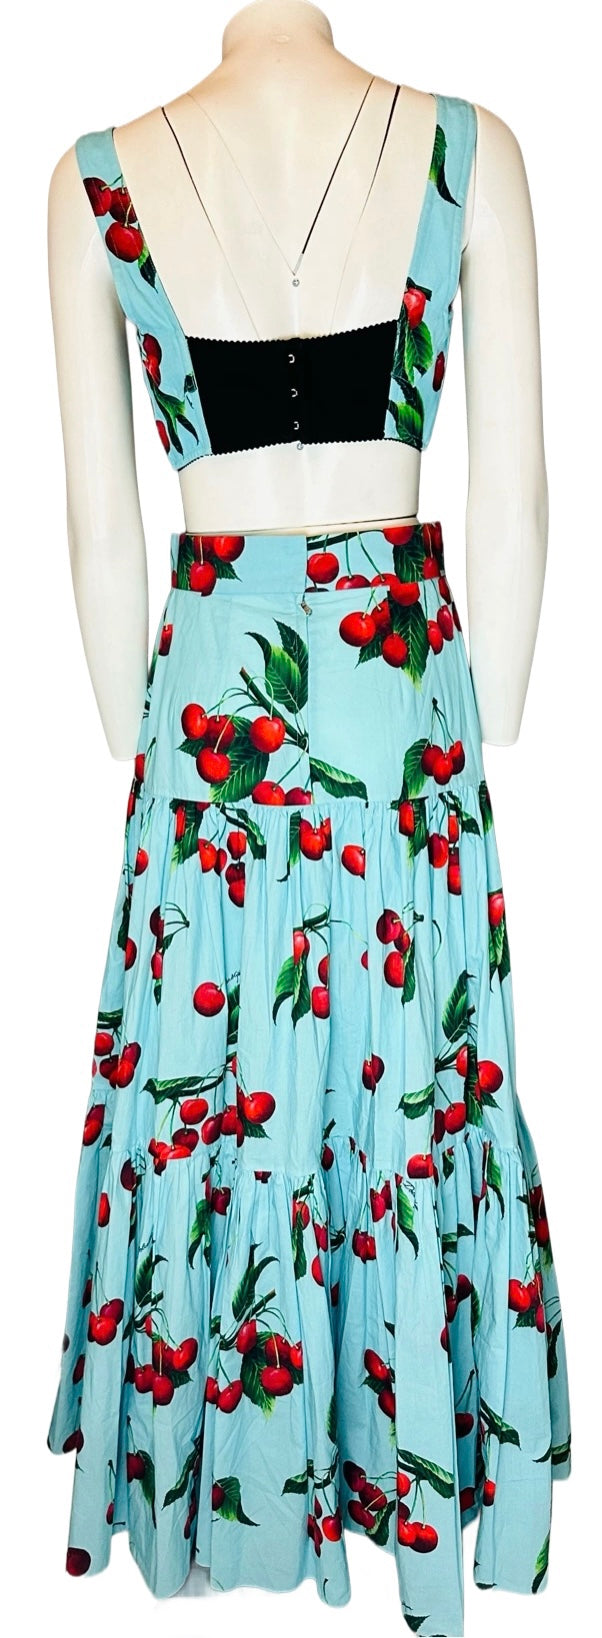 DOLCE & GABBANA - Brassiere & long Skirt cherries size 40 IT